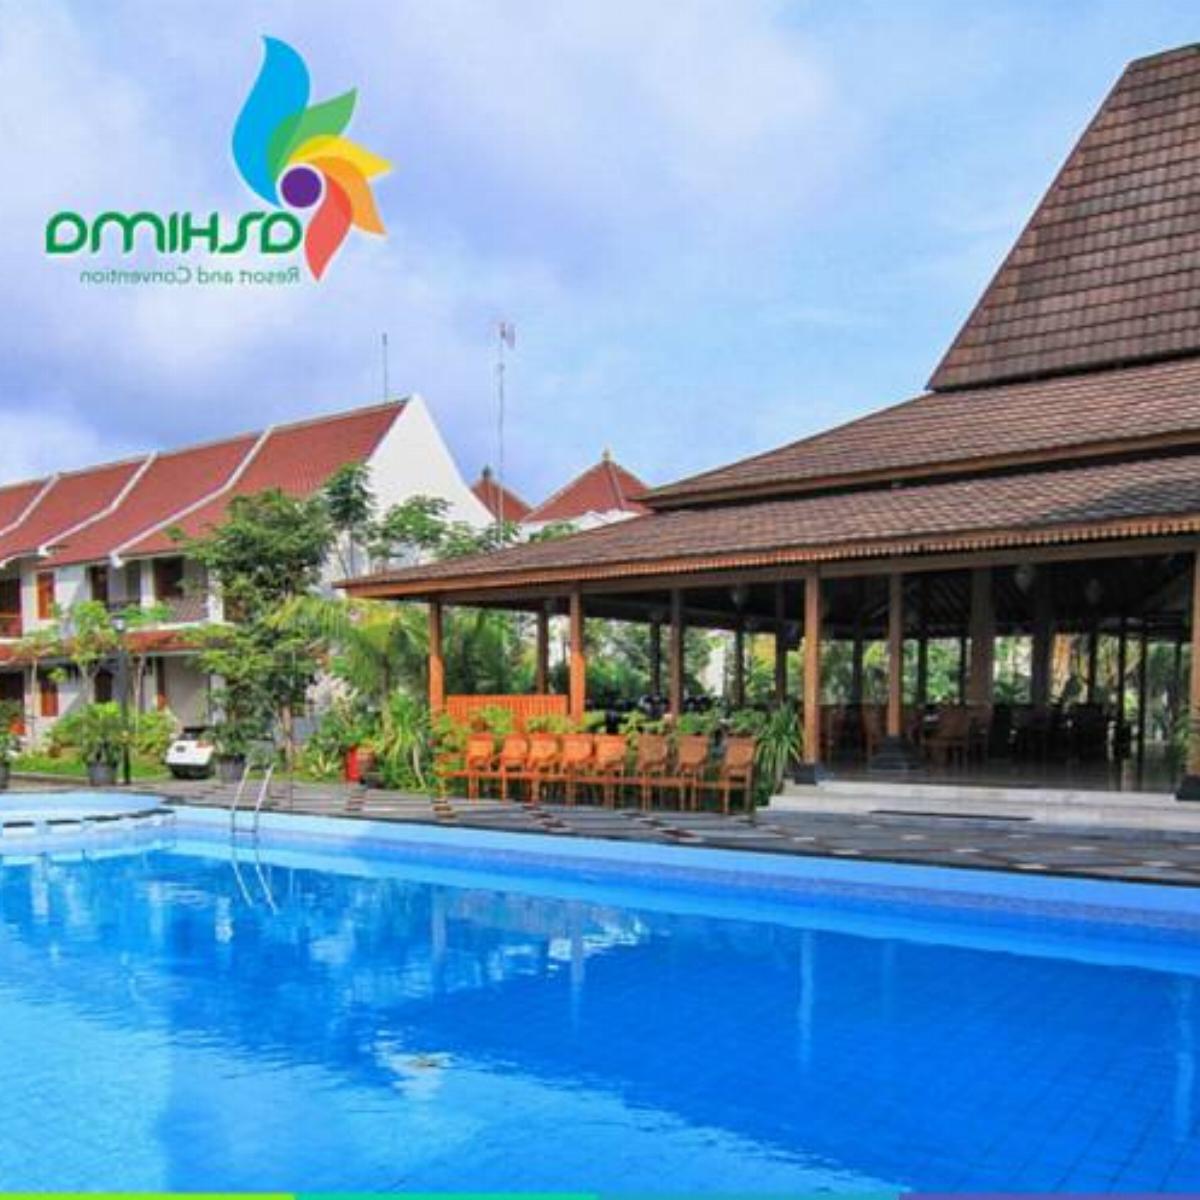 AZHIMA Resort and Convention Hotel Boyolali Indonesia